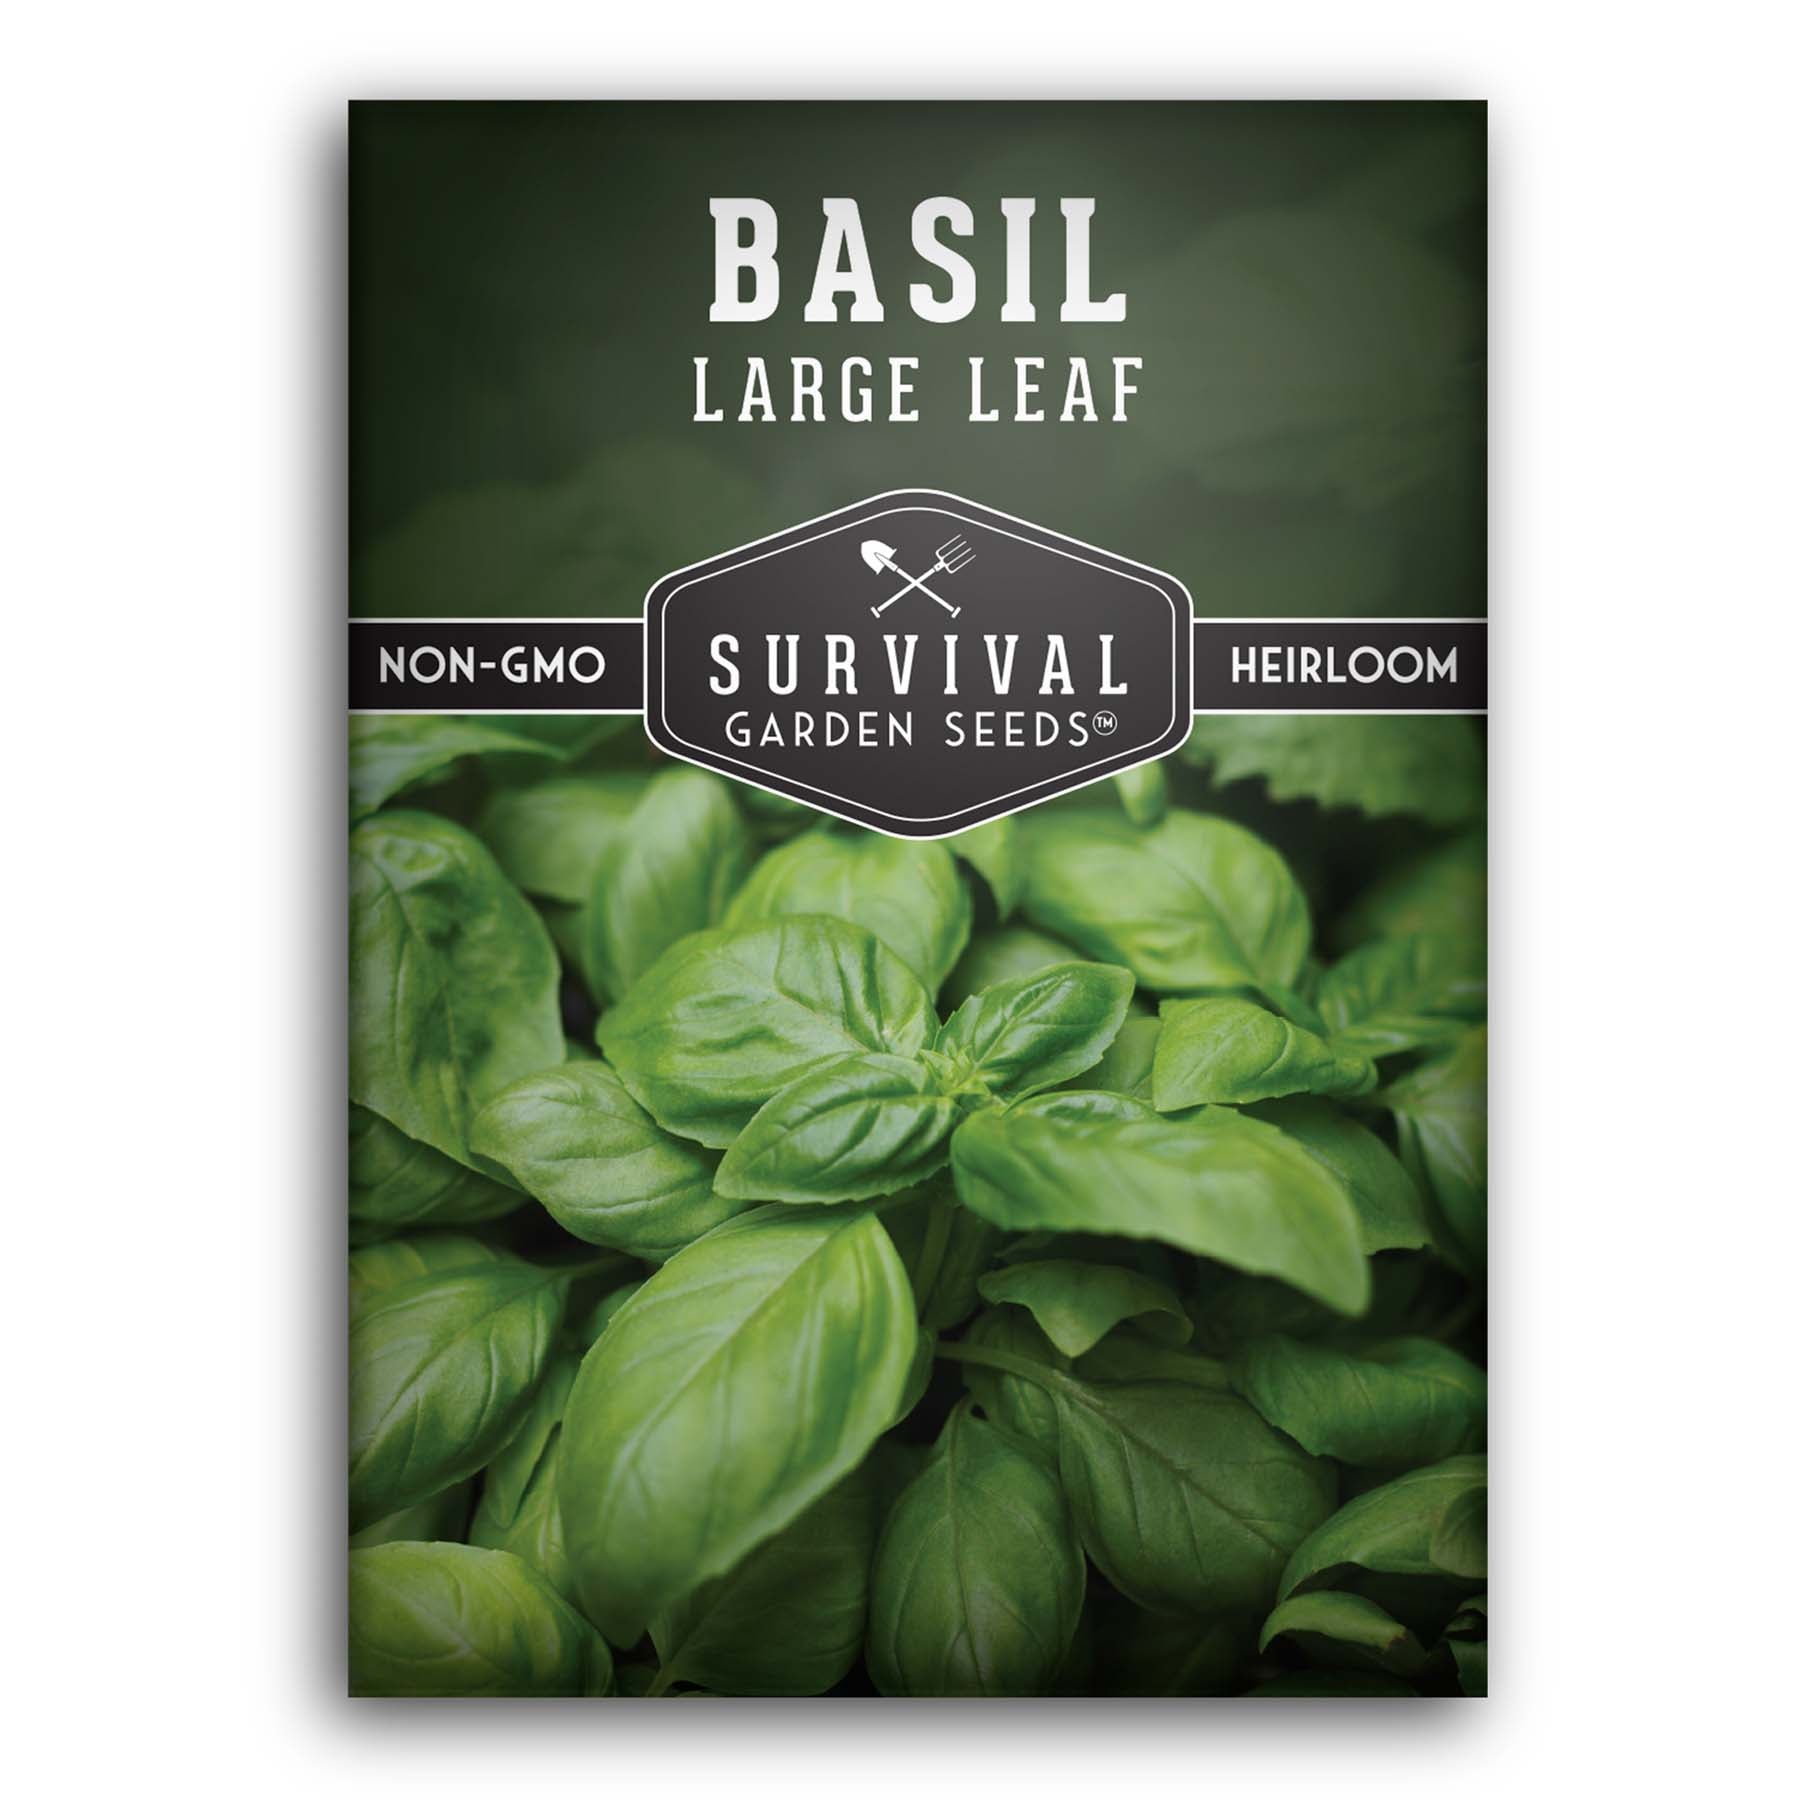 Large Leaf Basil seed for planting